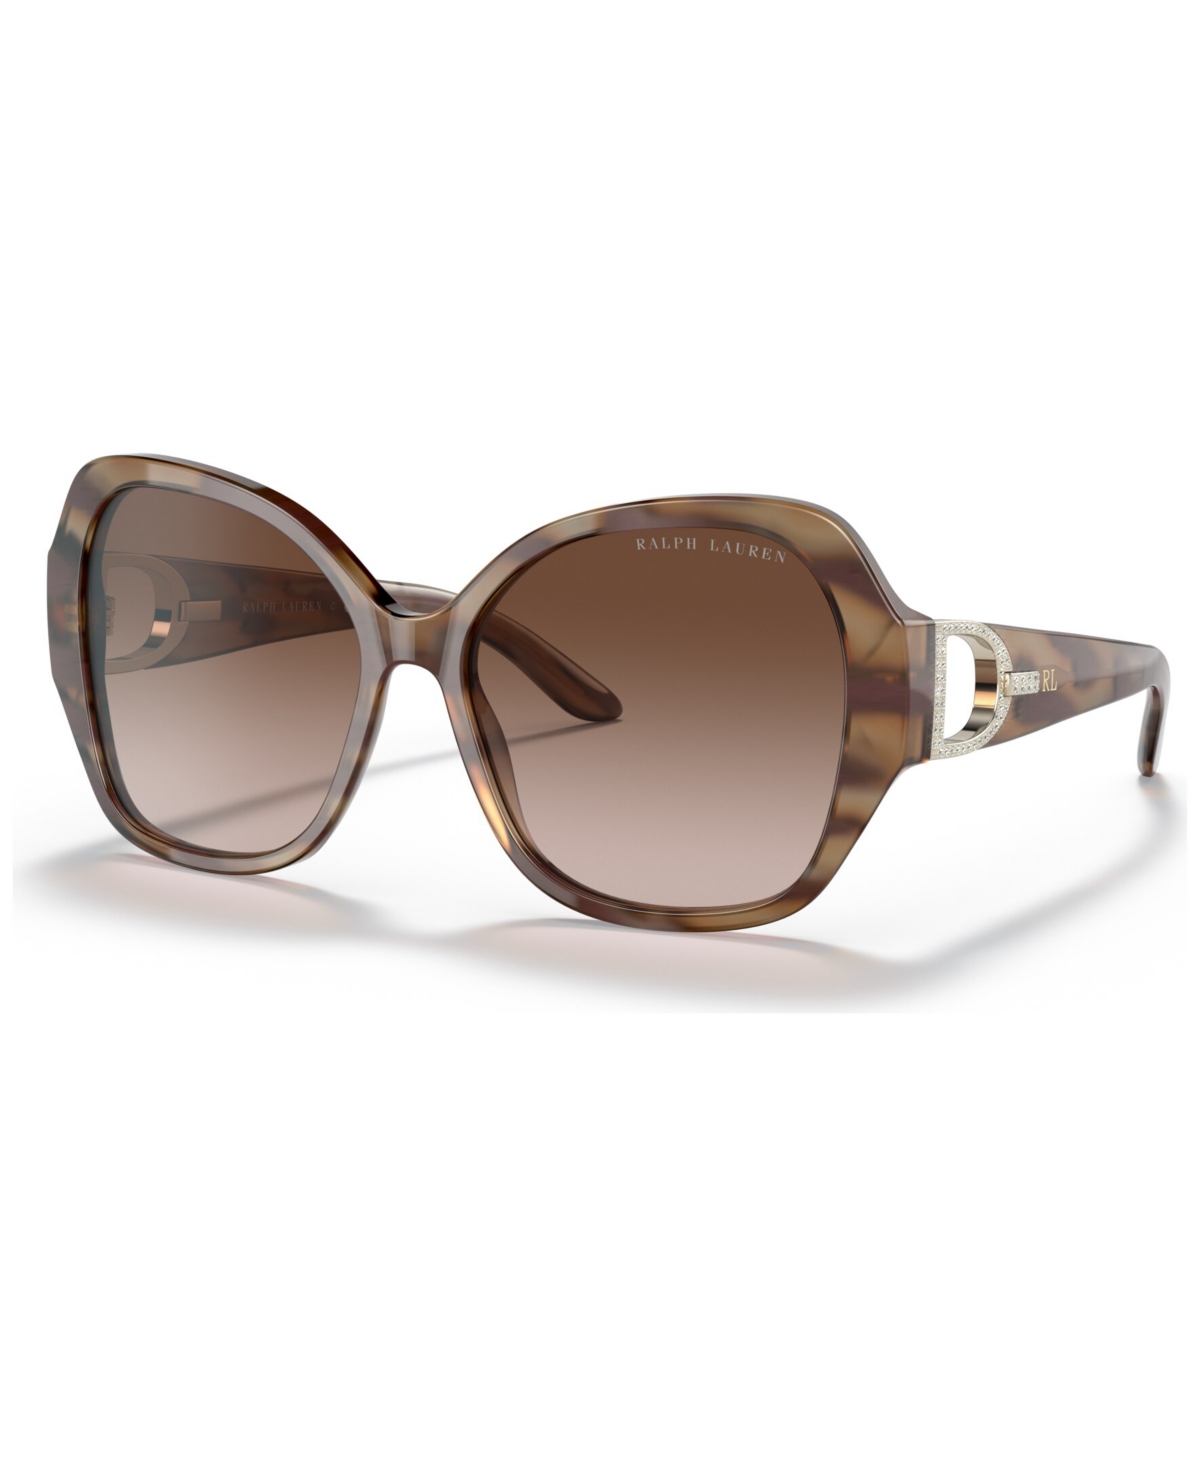 Ralph Lauren Women's Sunglasses, Rl8202b In Shiny Havana Homy